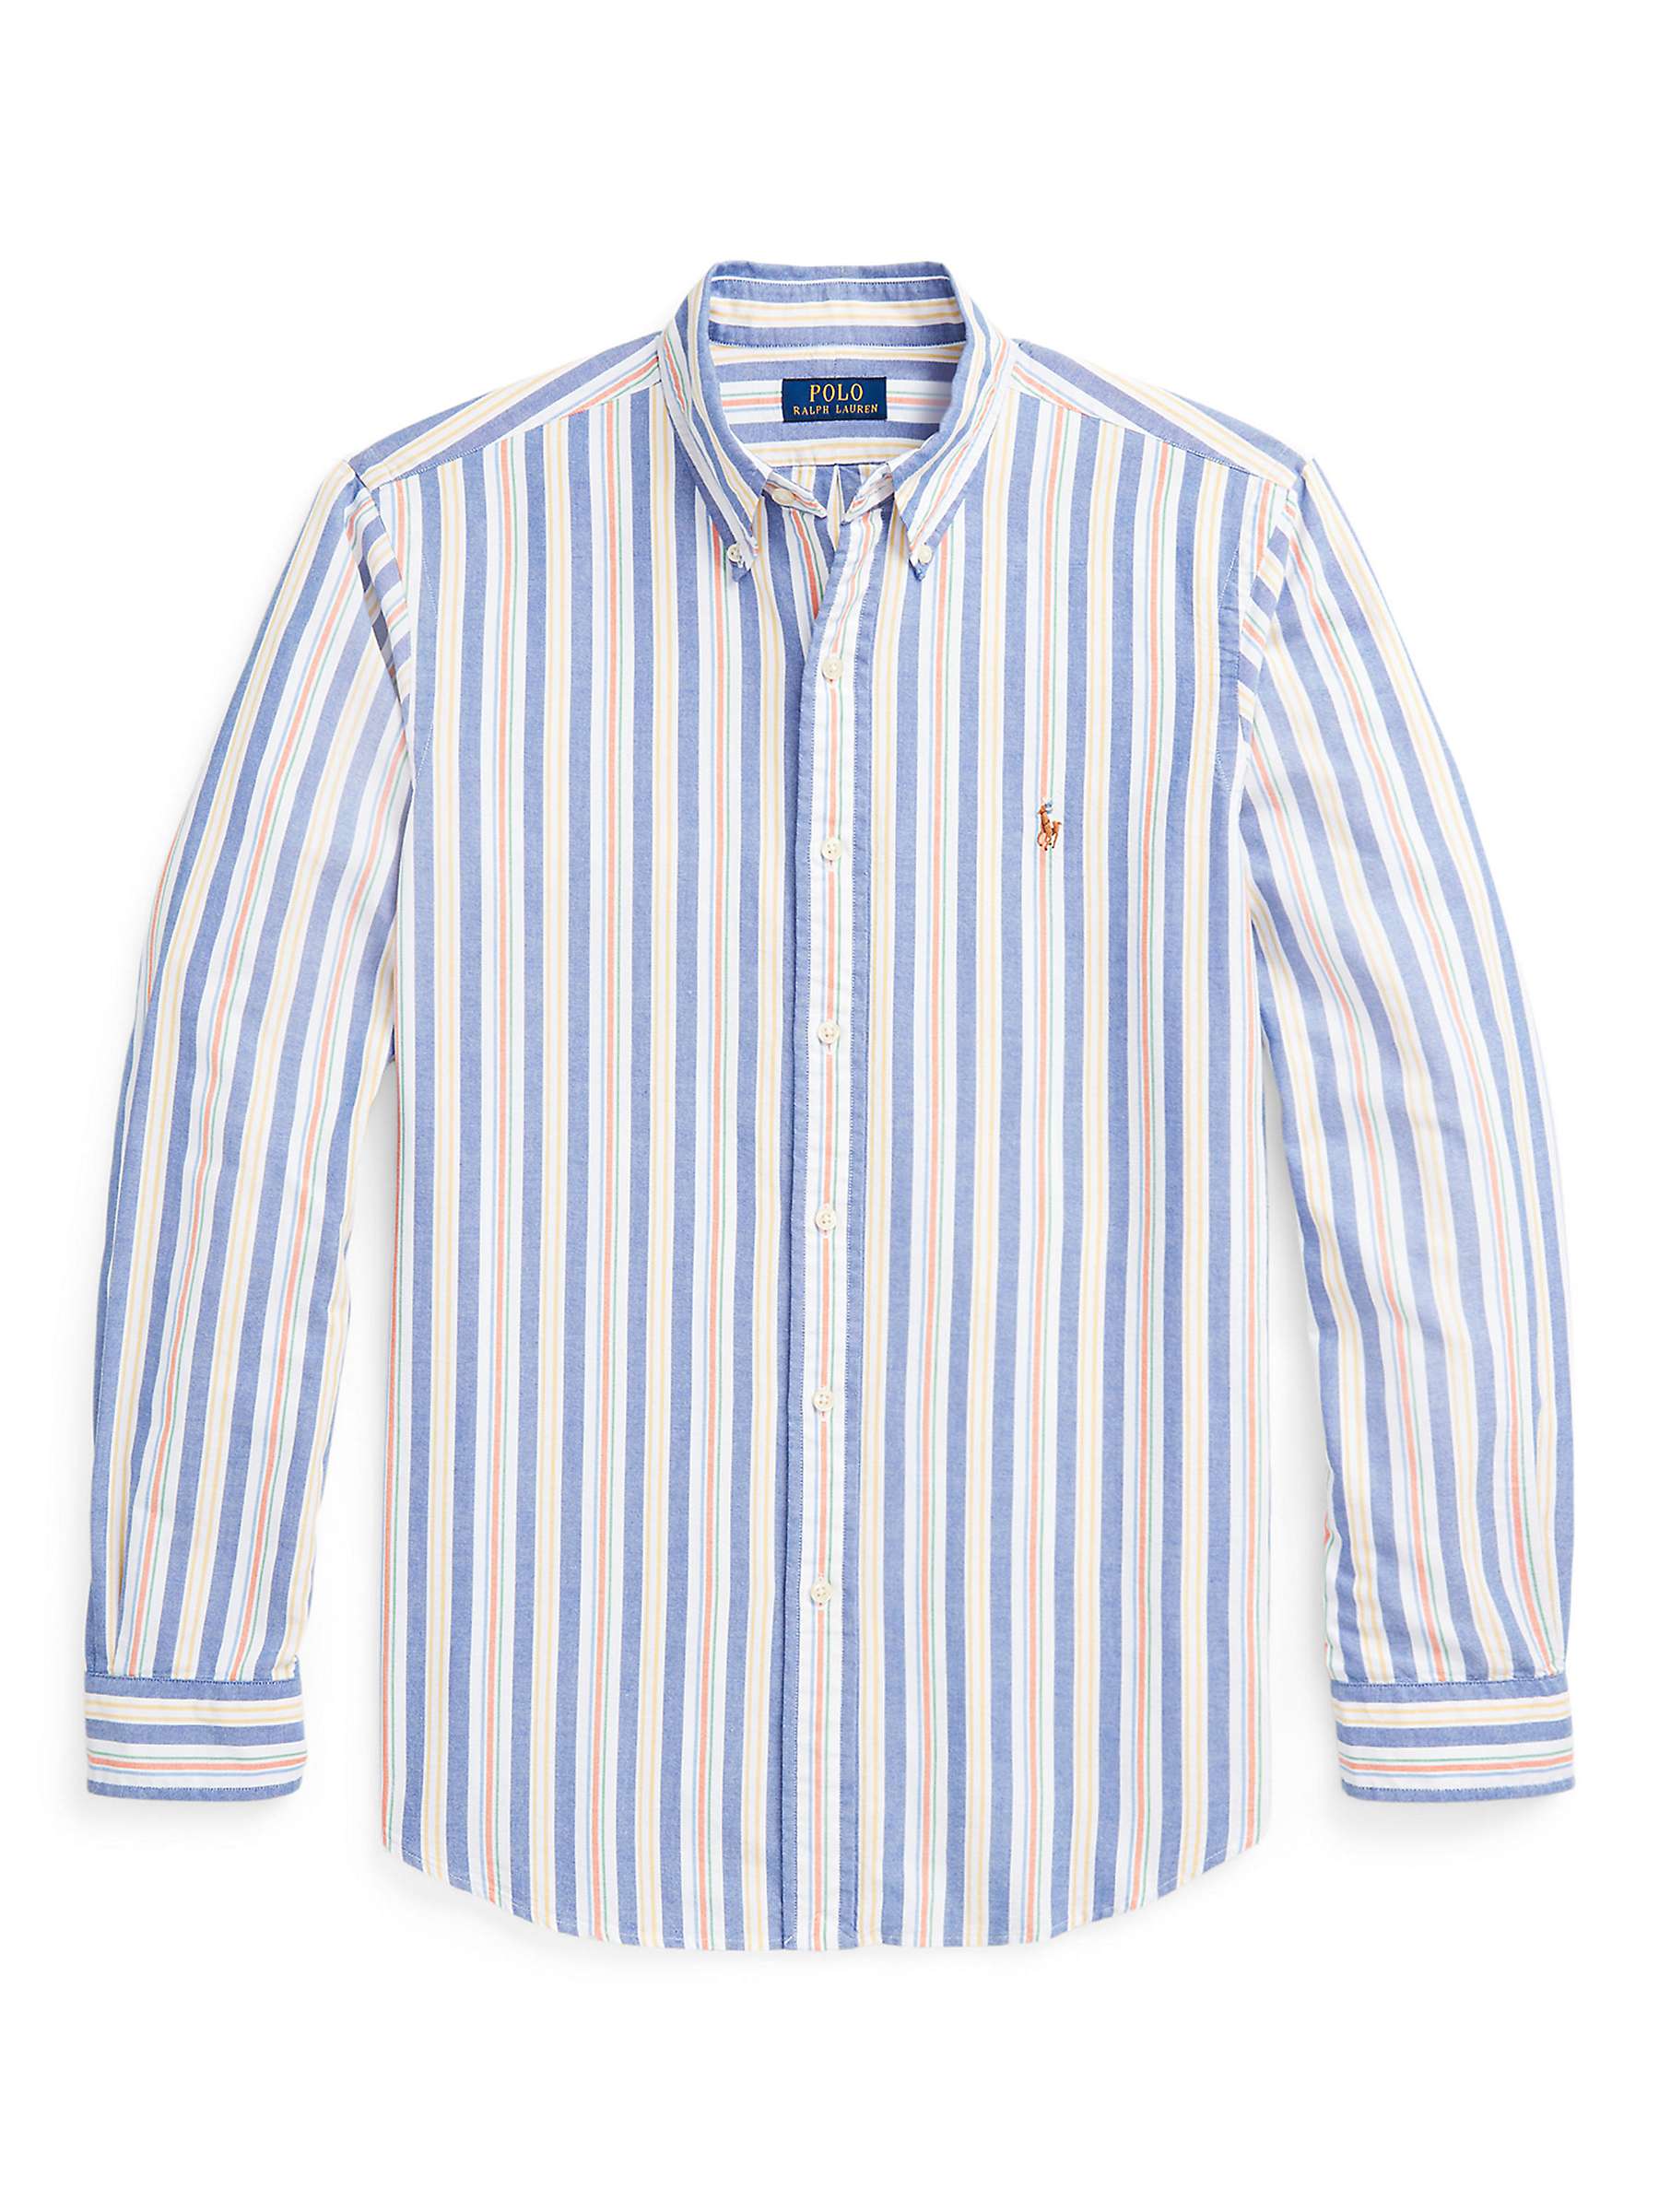 Buy Polo Ralph Lauren Custom Fit Stripe Oxford Shirt, Blue/Multi Online at johnlewis.com